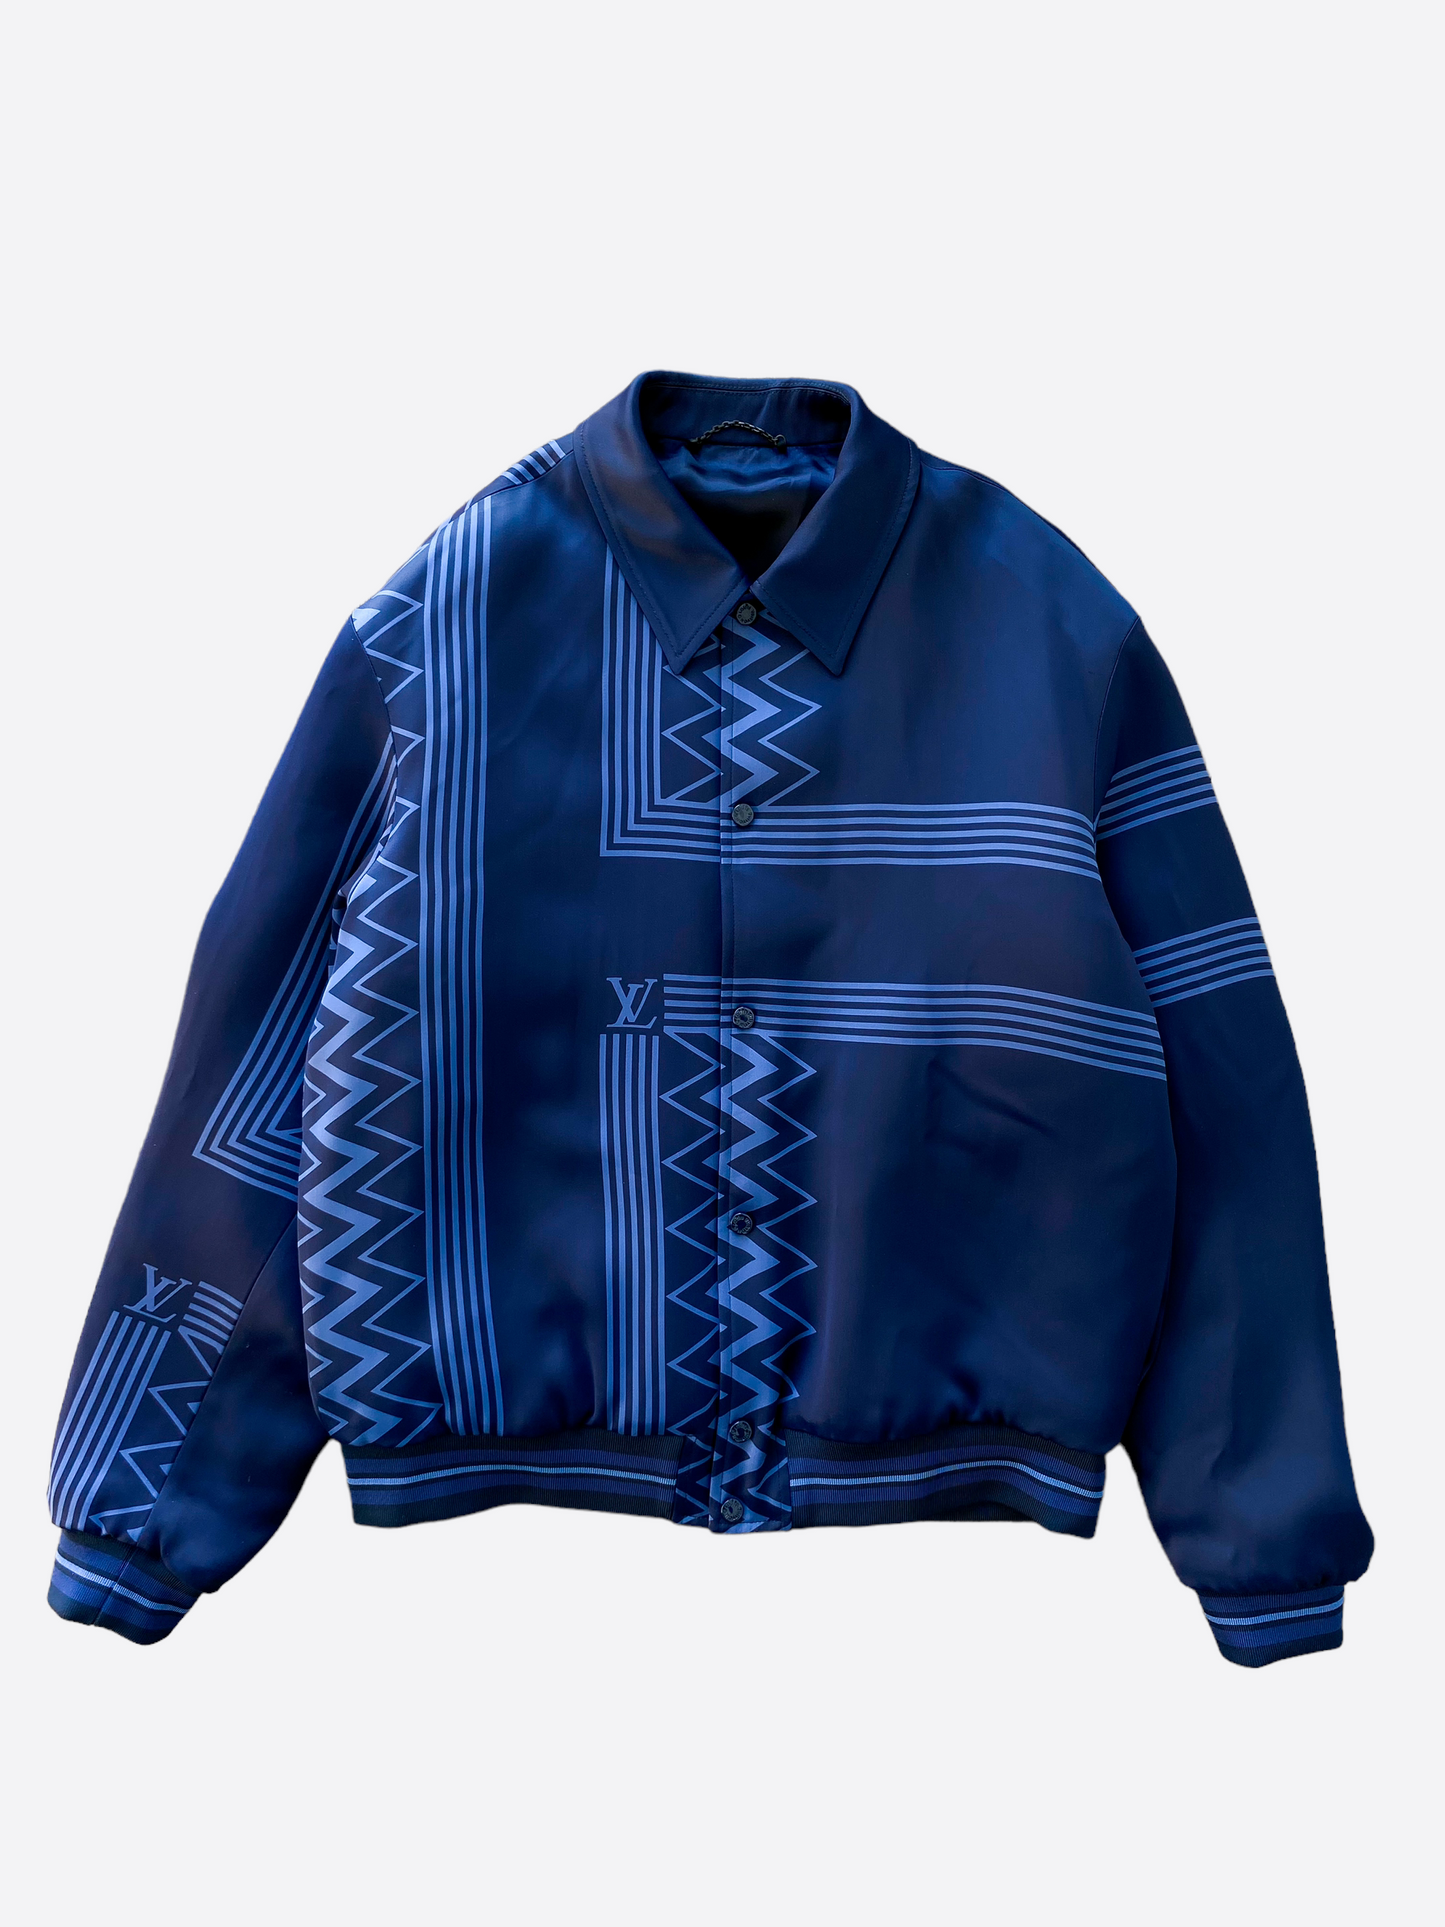 Louis Vuitton Karakoram Souvenir Jacket - Vitkac shop online